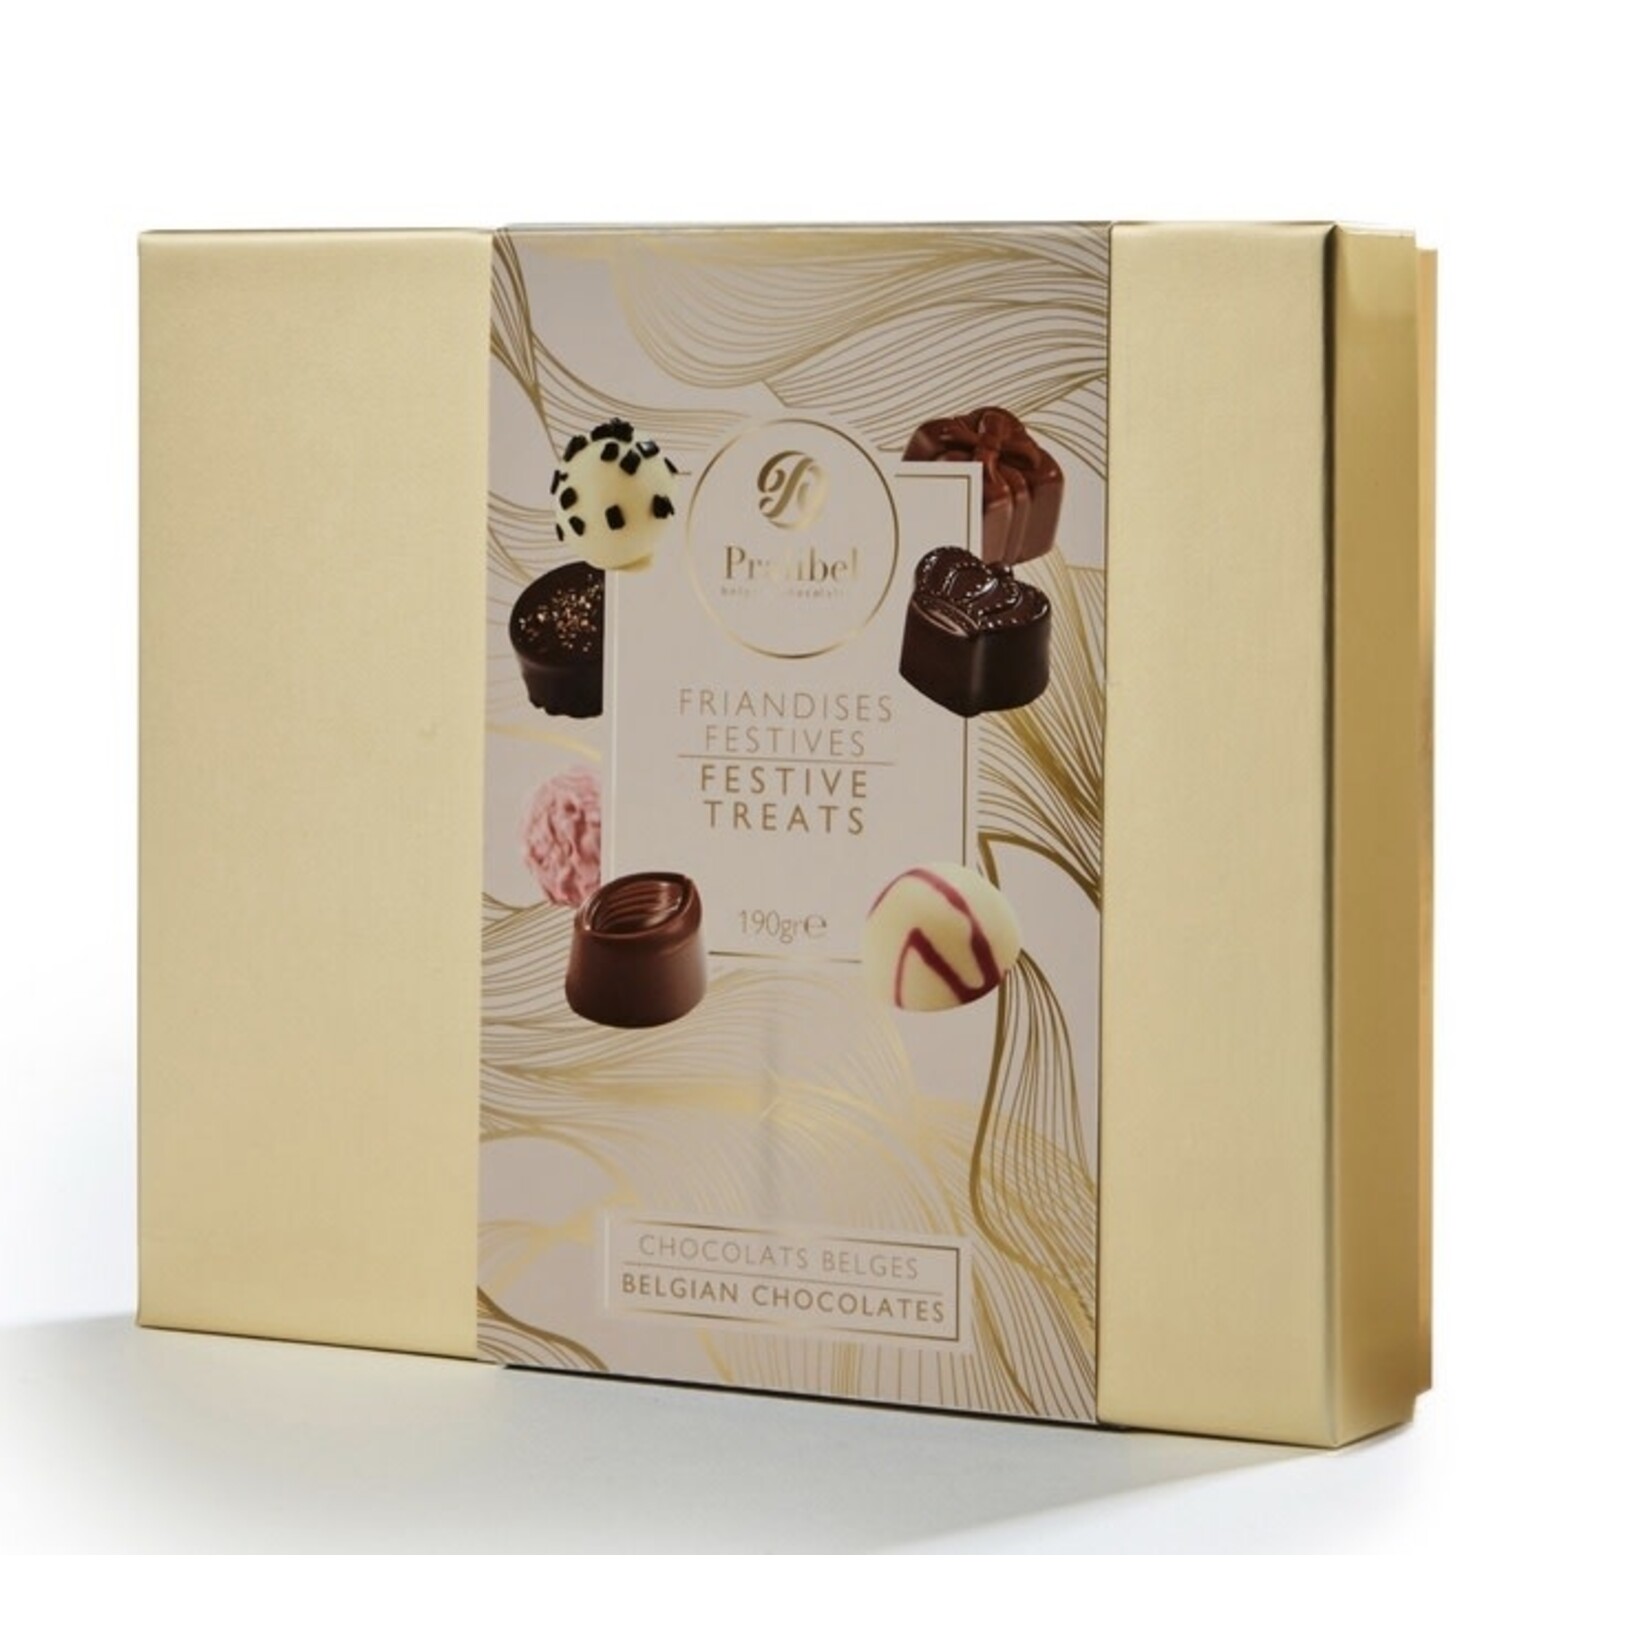 PRALIBEL PRALIBEL Festive Treats - Asst Chocolate Box